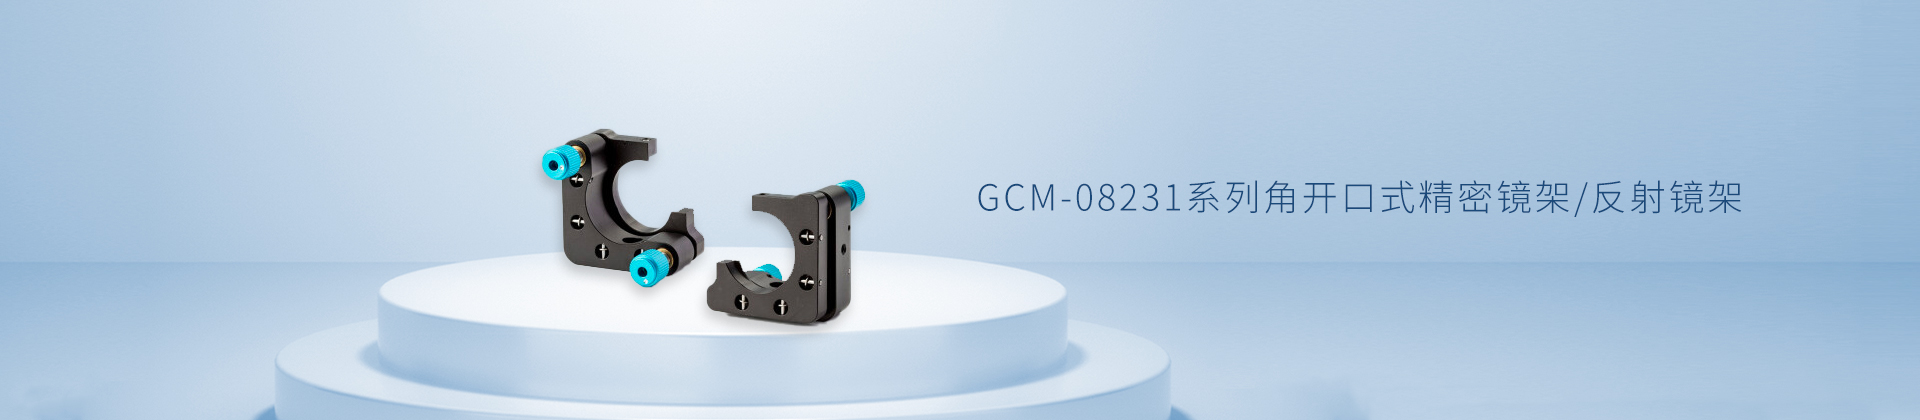 GCM-08231系列角开口式精密镜架/反射镜架